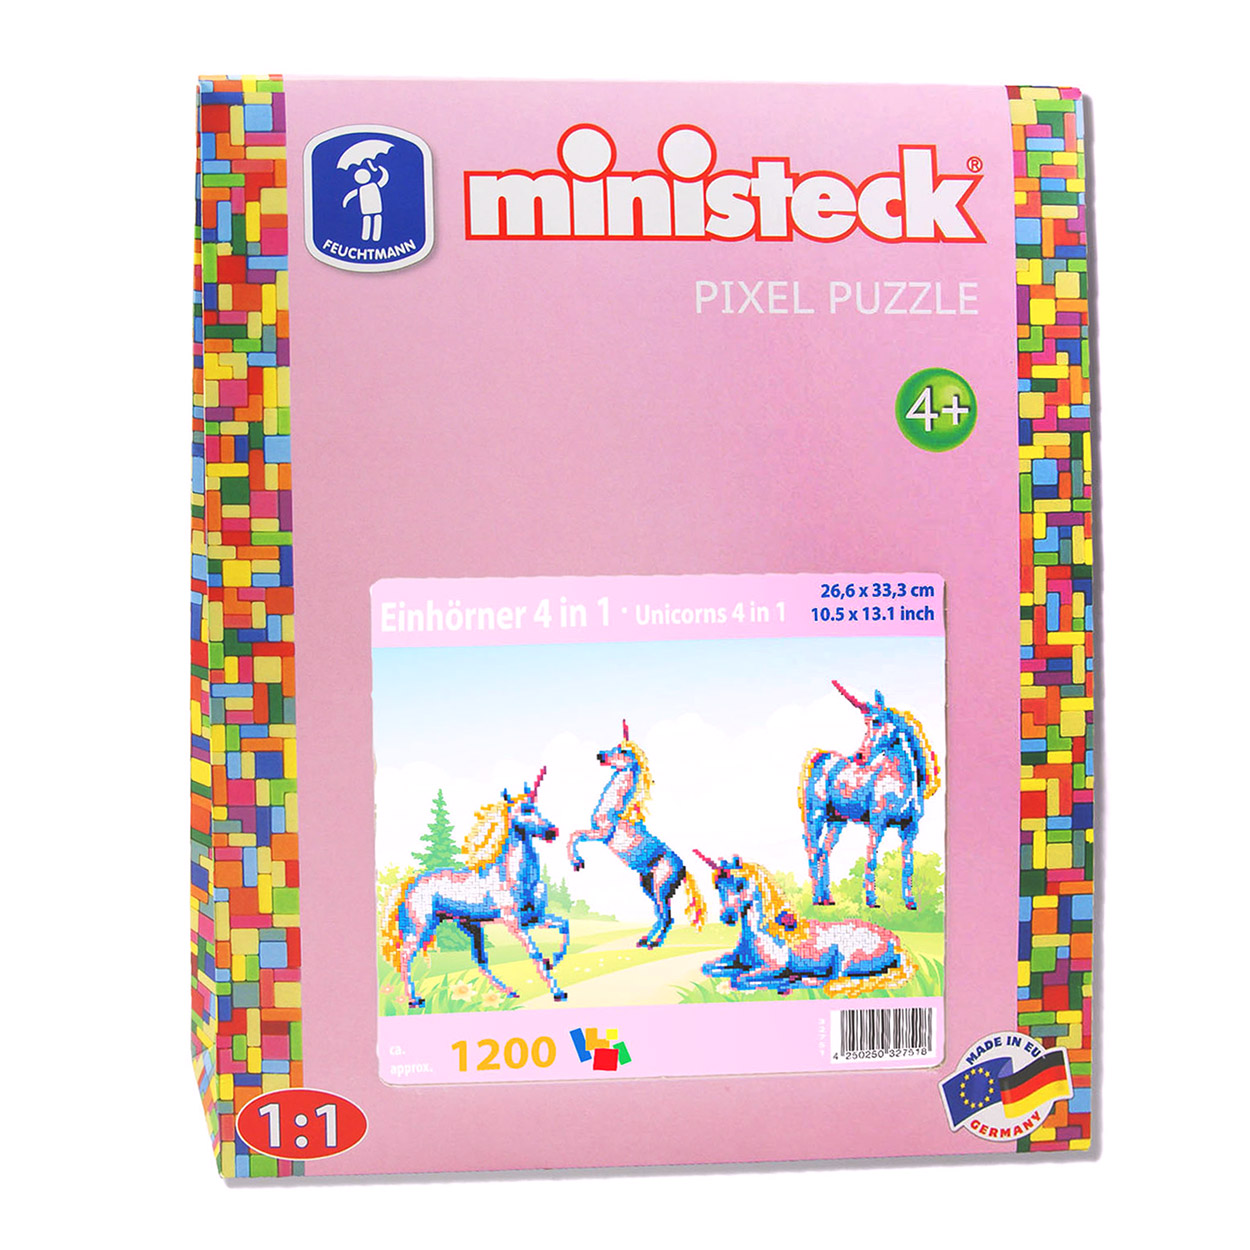 Ministeck 1200st. | Thimble Toys